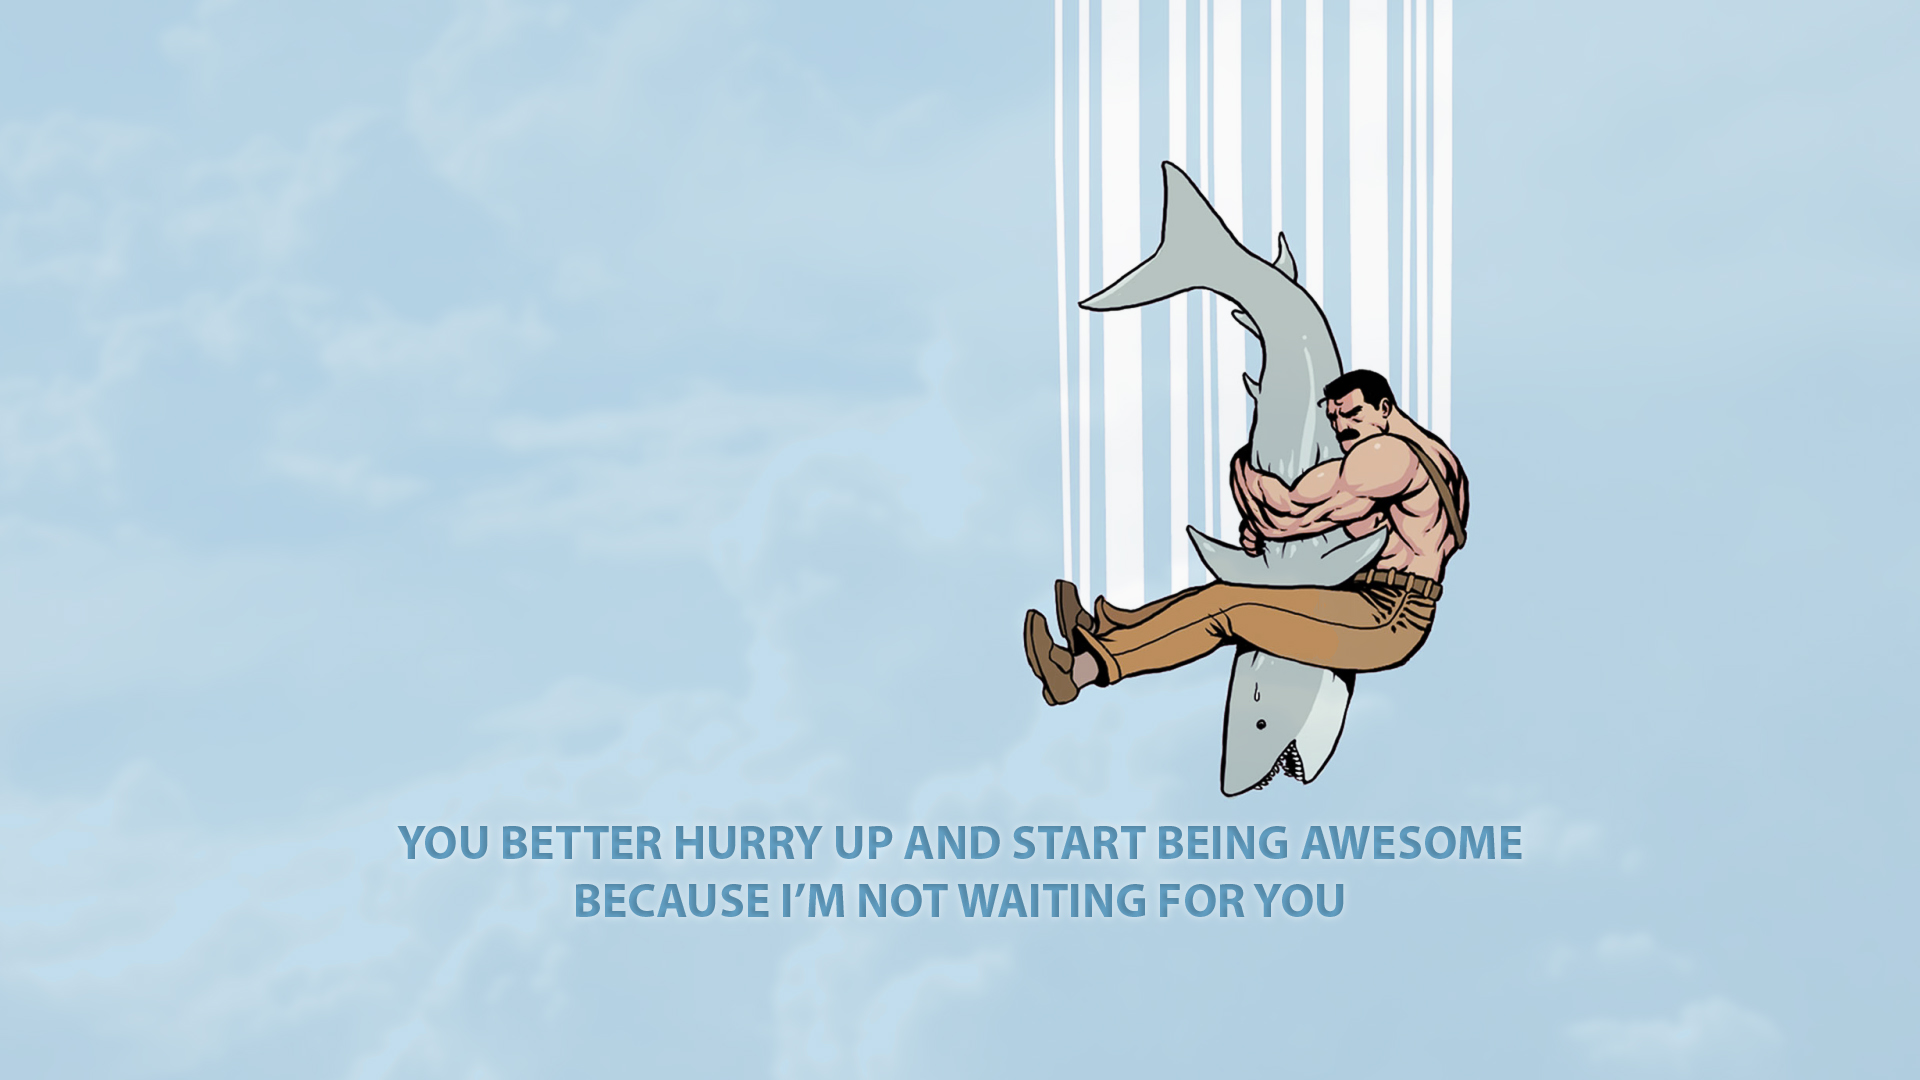 Shark Motivational Quotes. QuotesGram